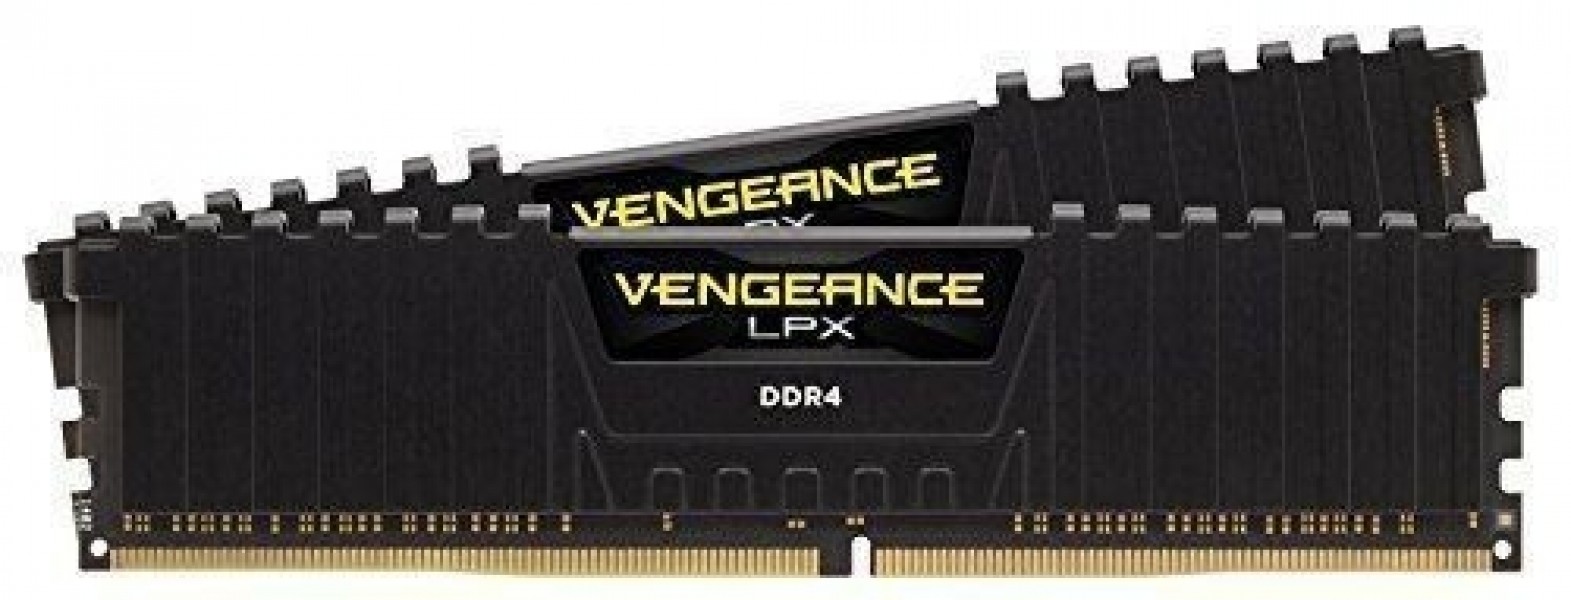 Corsair Vengeance LPX 8GB 2400MHz DDR4 CL14 KIT OF 2 CMK8GX4M2A2400C14